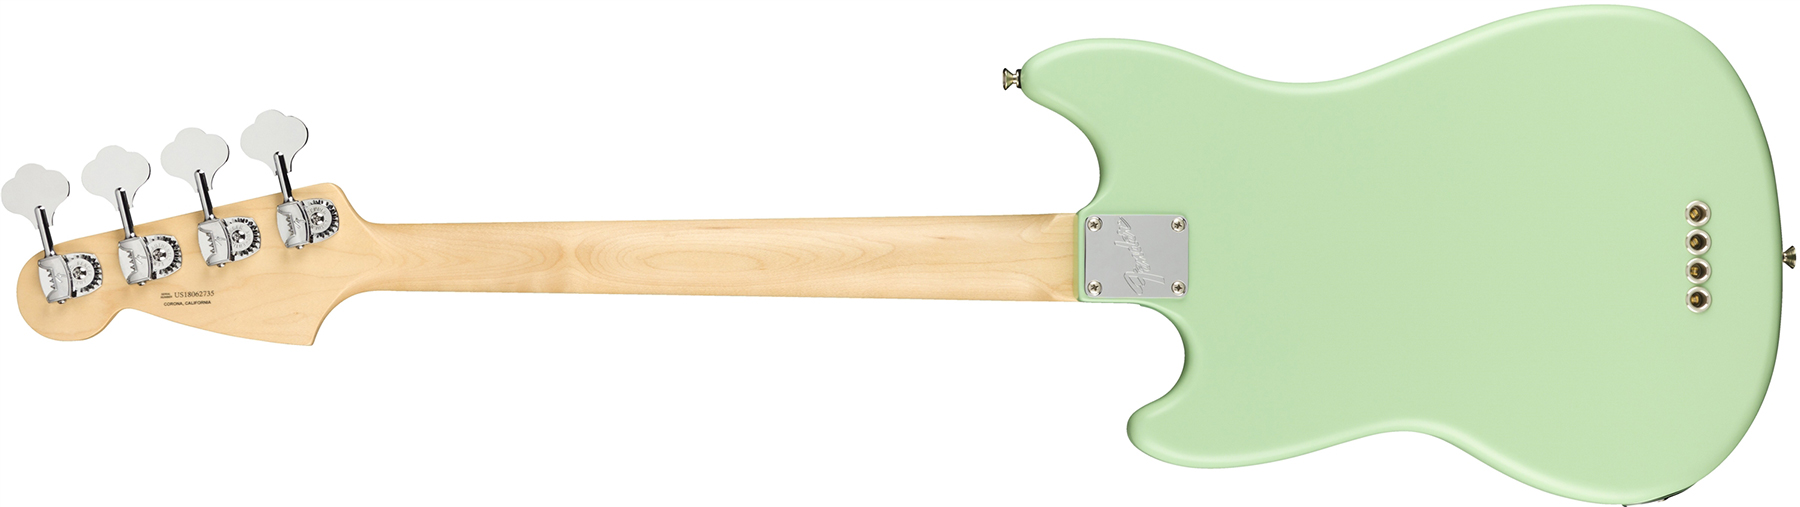 Fender Mustang Bass American Performer Usa Rw - Satin Surf Green - Basse Électrique Enfants - Variation 1